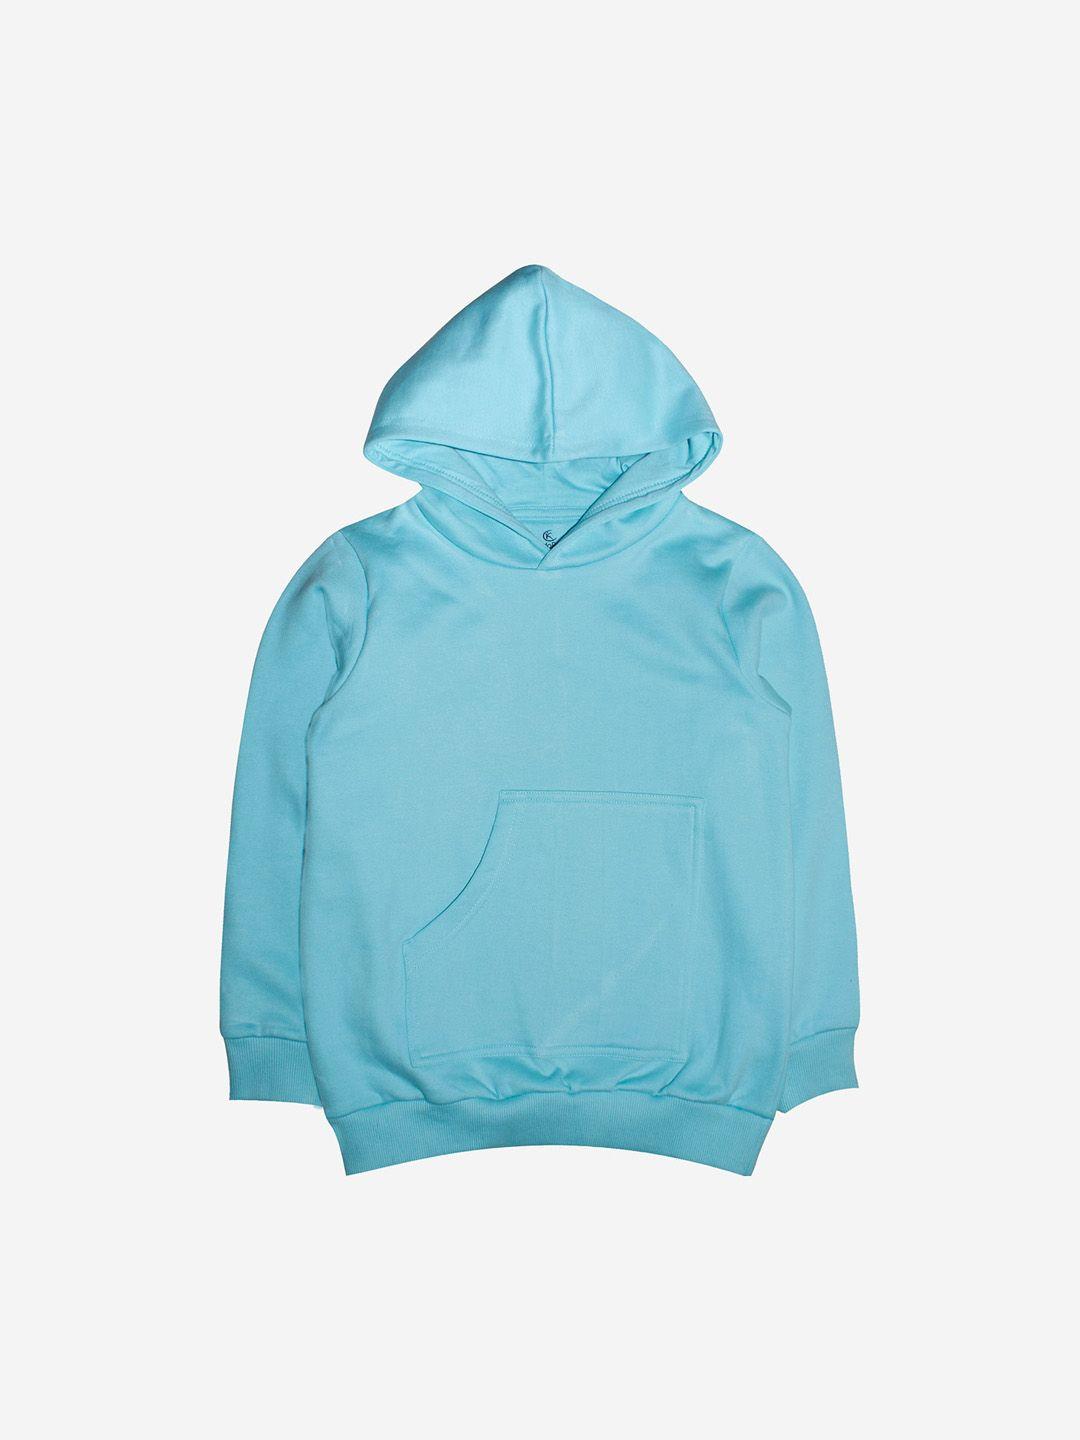 kiddopanti unisex kids blue hooded sweatshirt